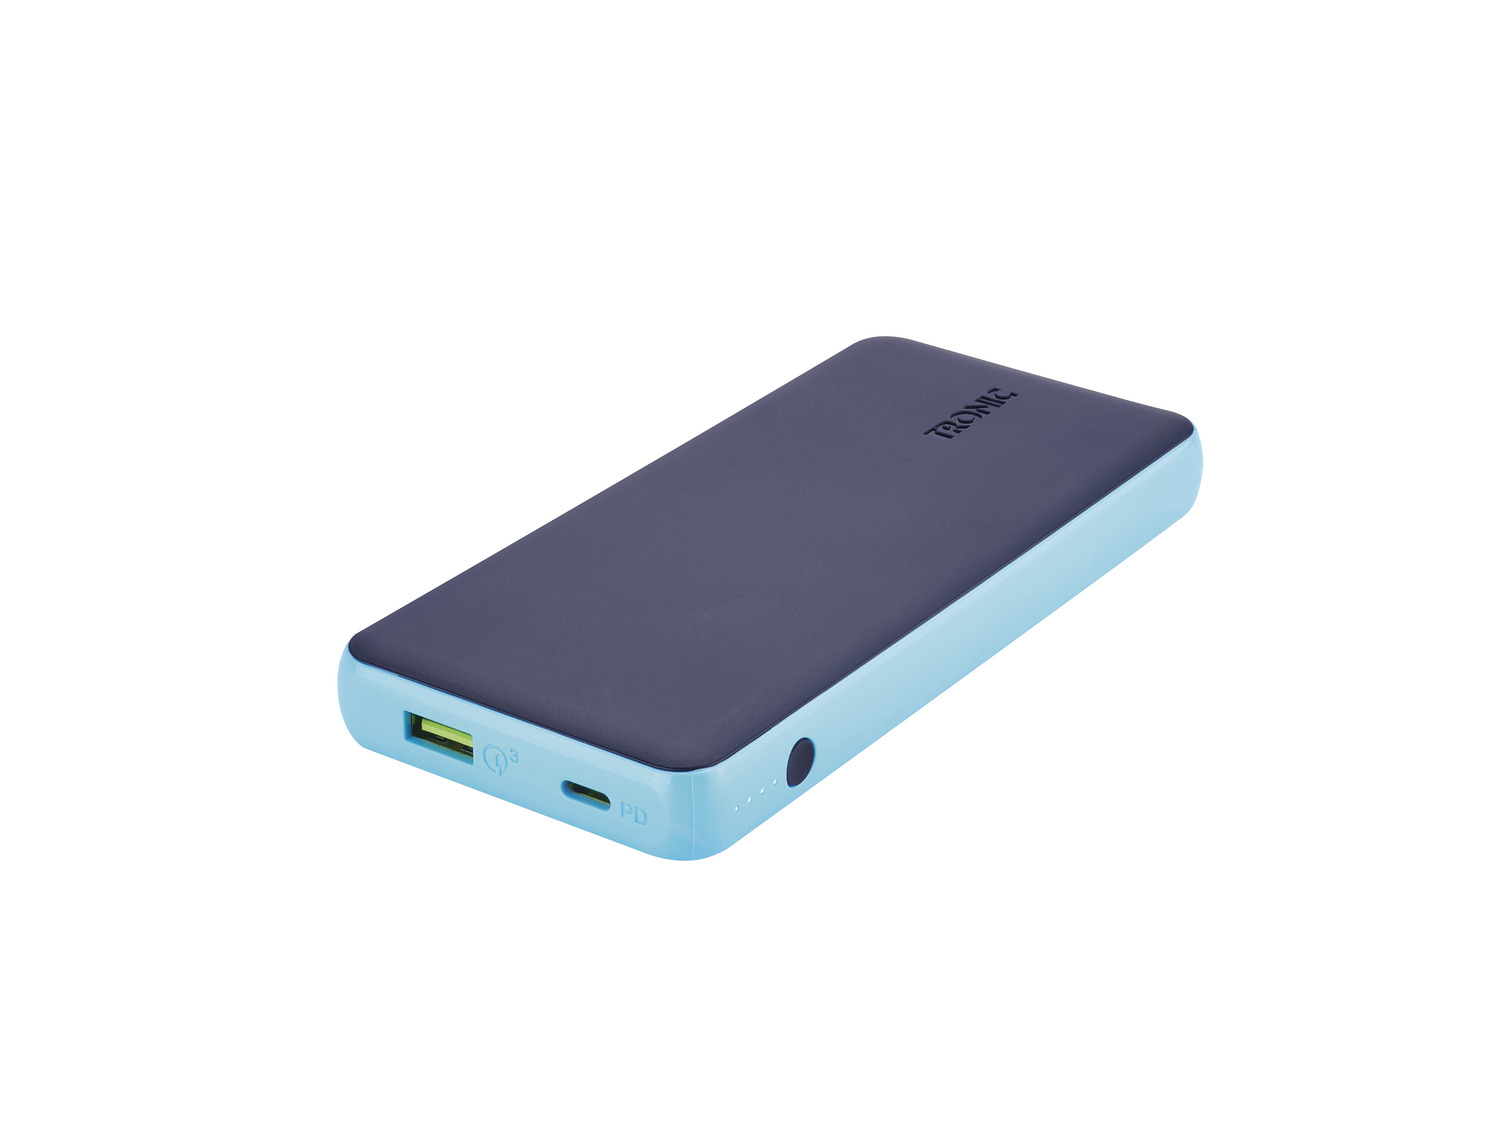 Batterie nomade - Achat batterie secours smartphone et tablette